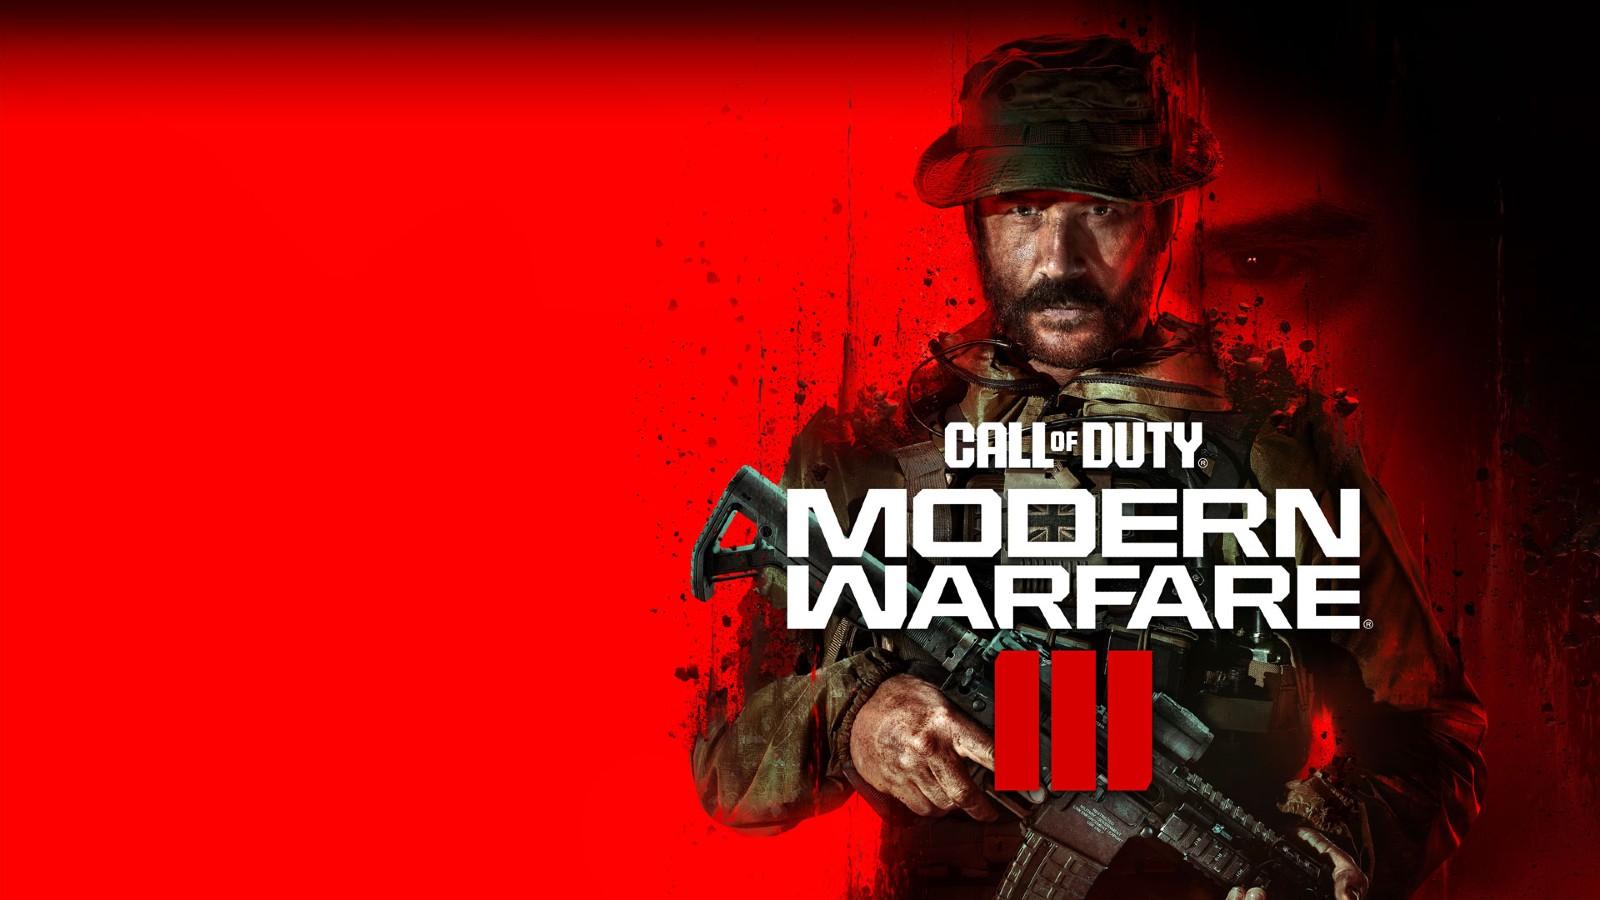 Call of Duty: Modern Warfare III for PlayStation 4